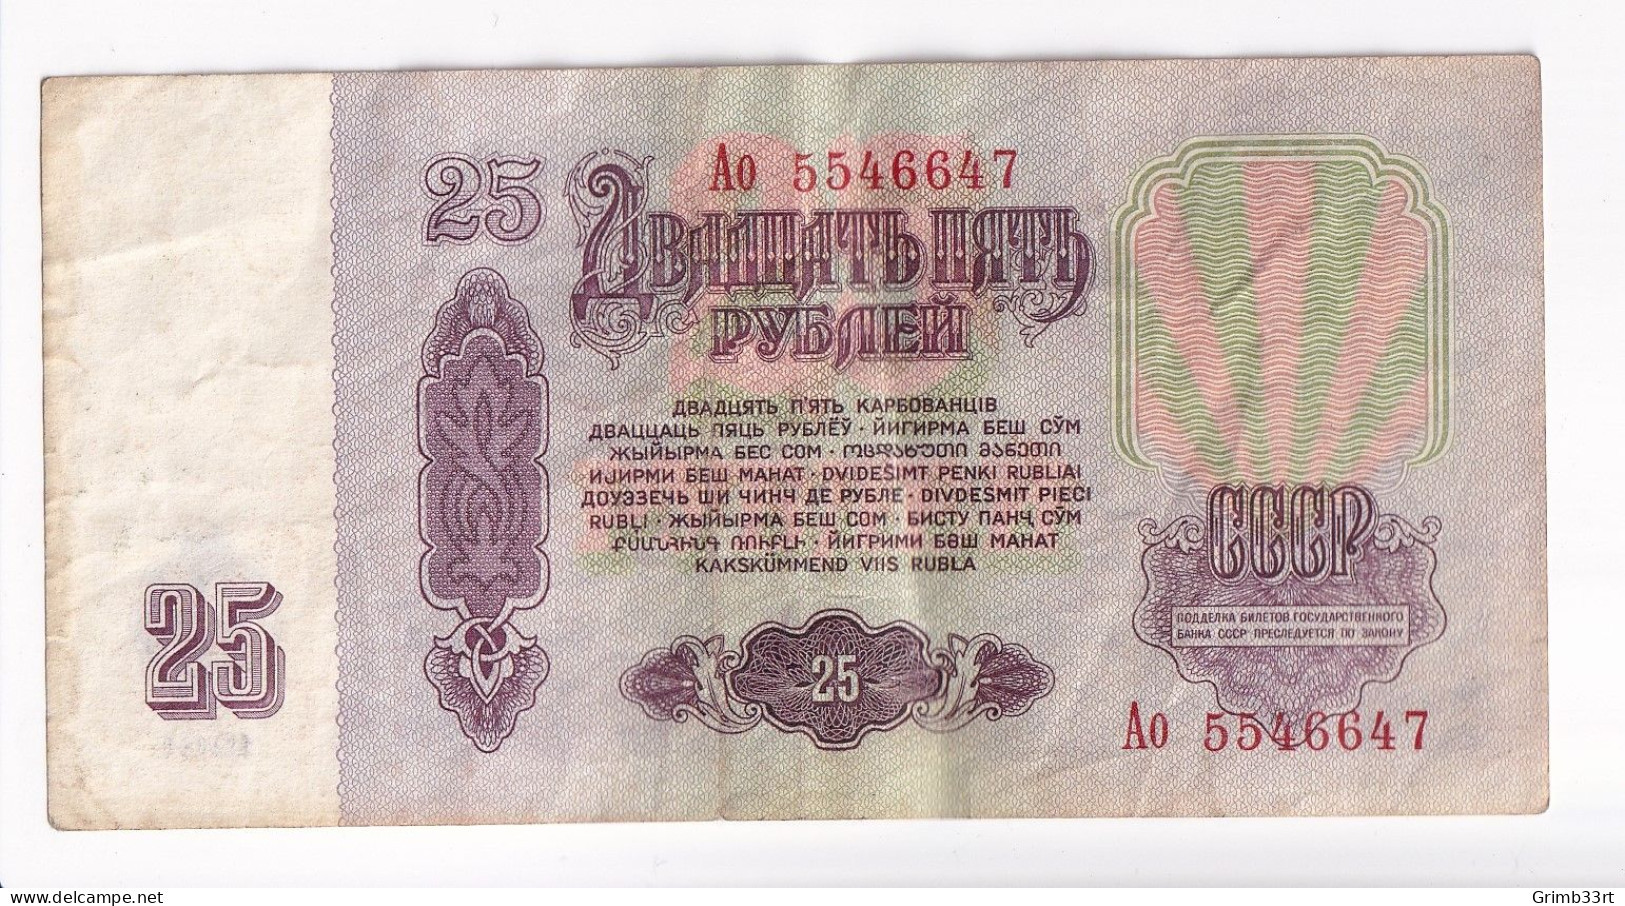 Russia / CCCP - 25 Ruble - 1961 - Russie